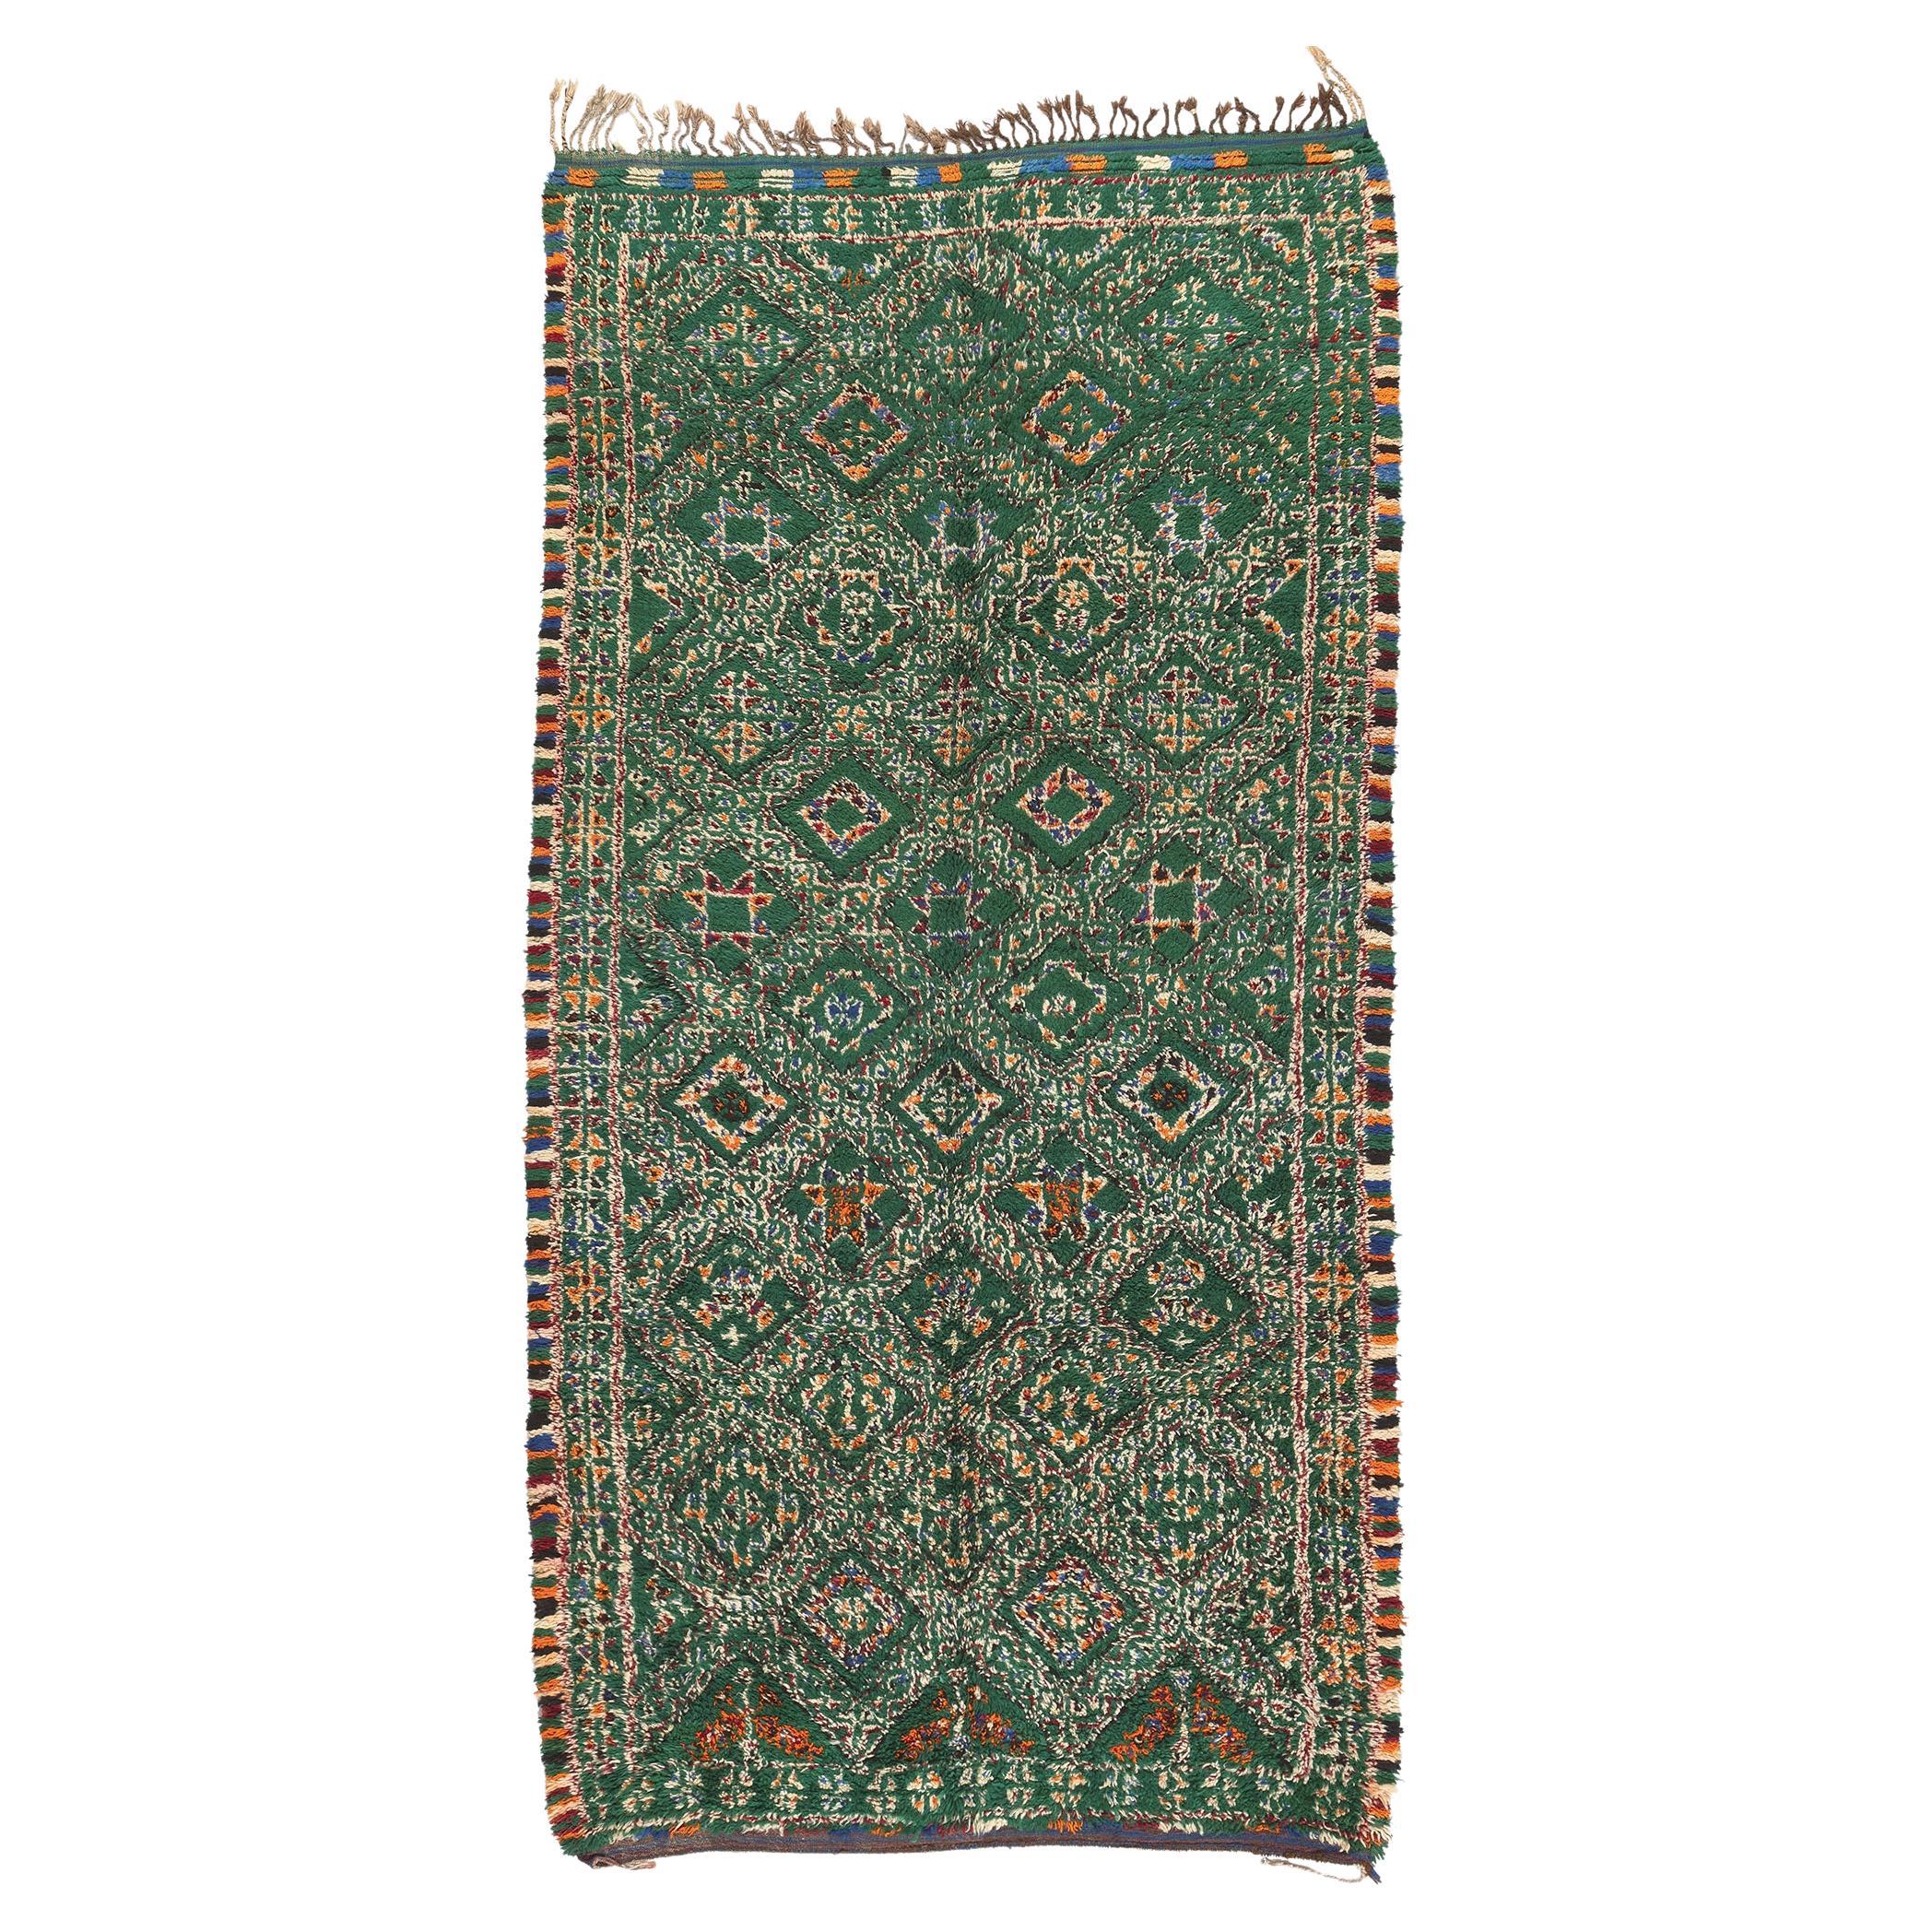 Vintage Green Beni MGuild Moroccan Rug, Cozy Nomad Meets Tribal Enchantment For Sale